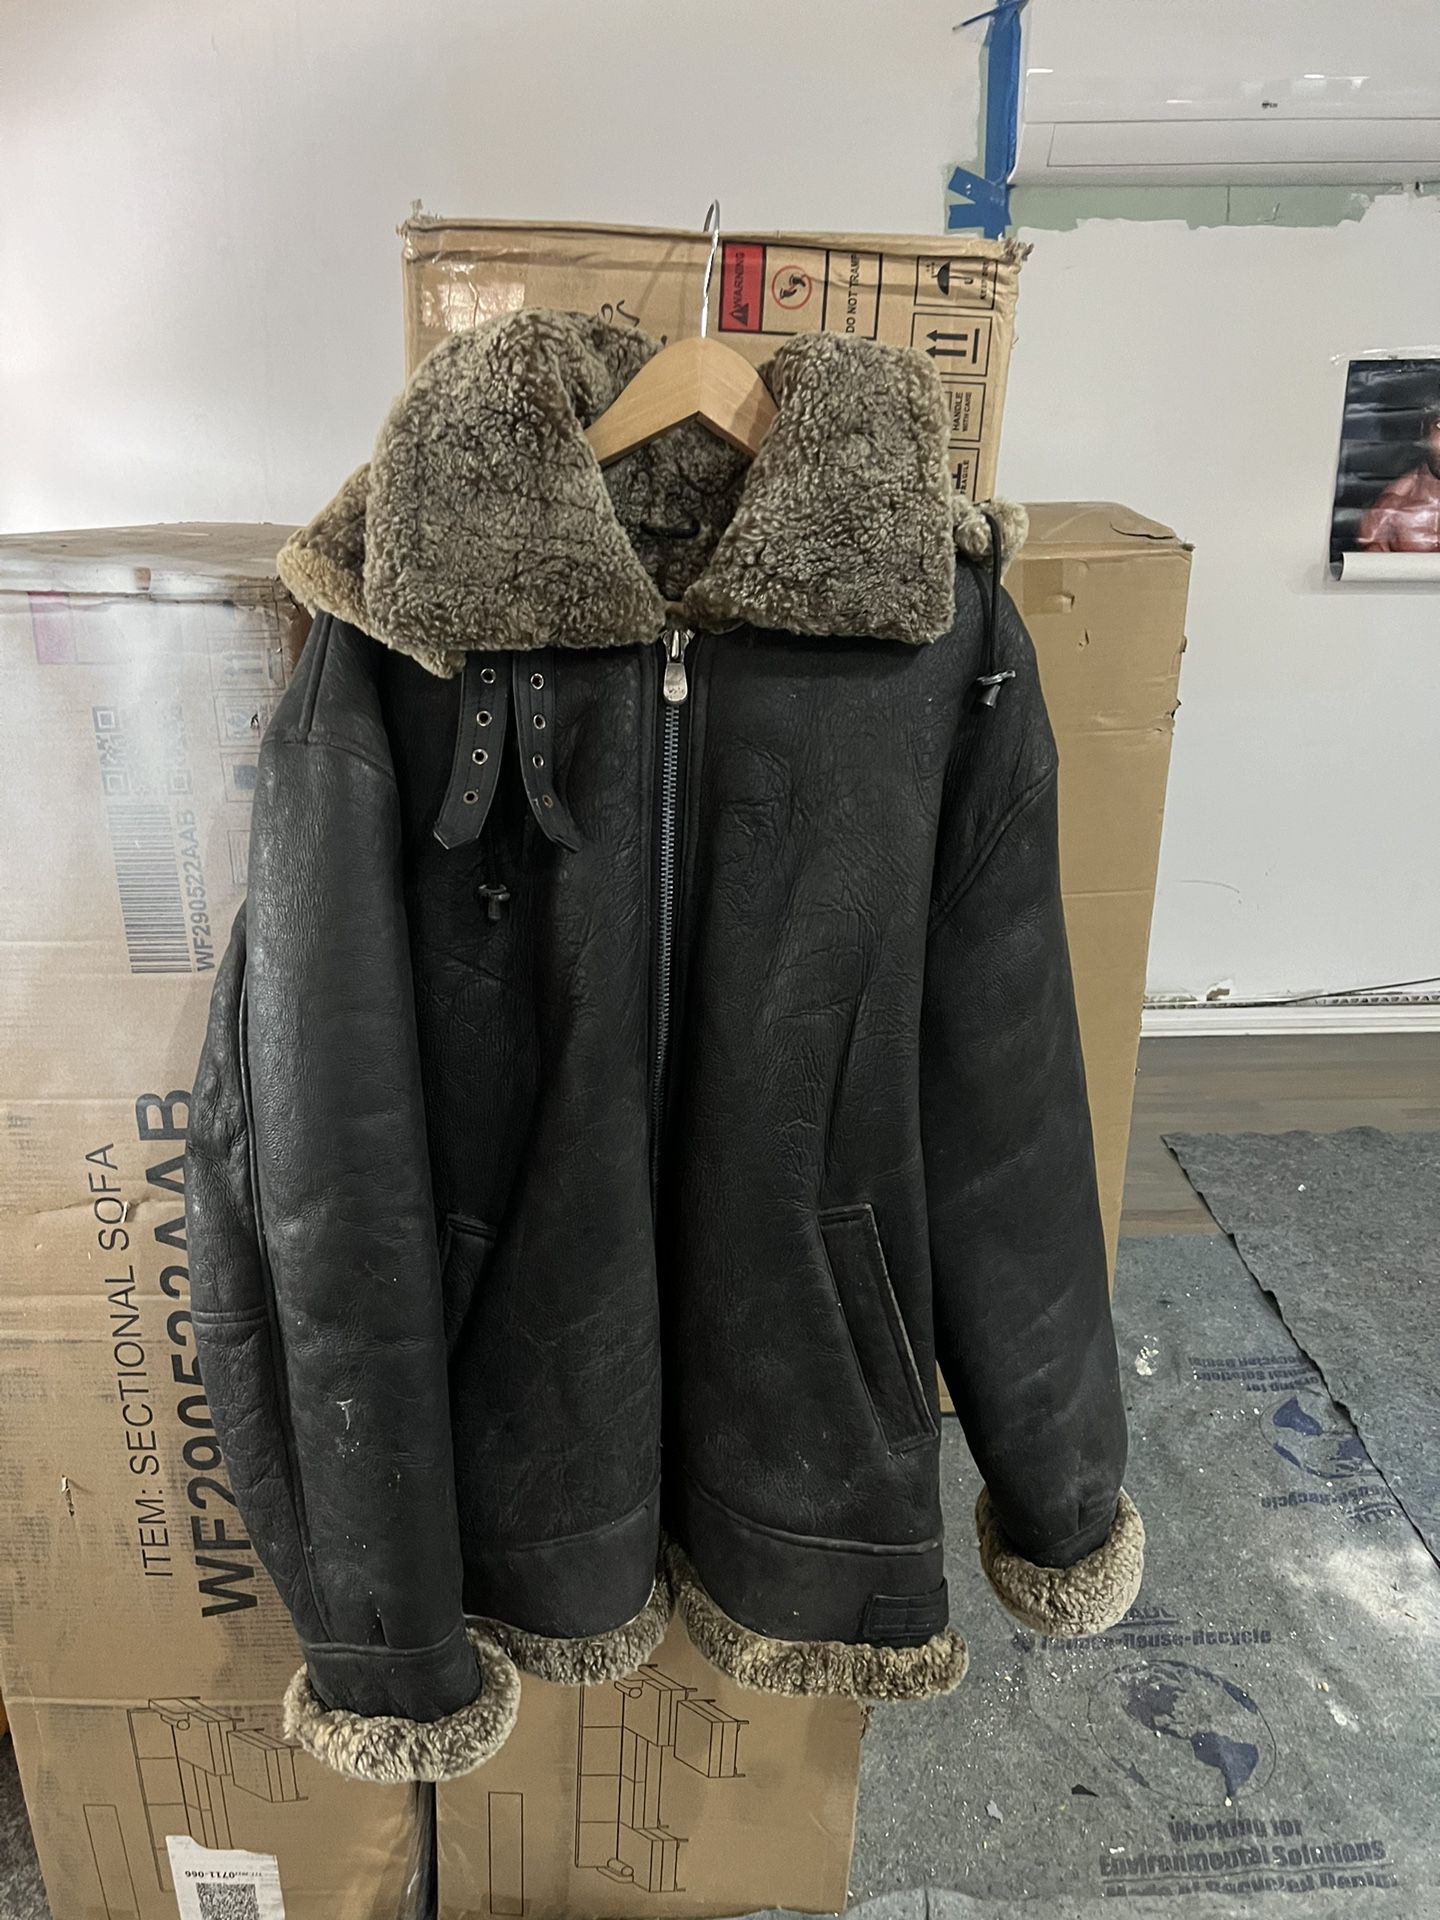 Shearling Leather Jacket Men